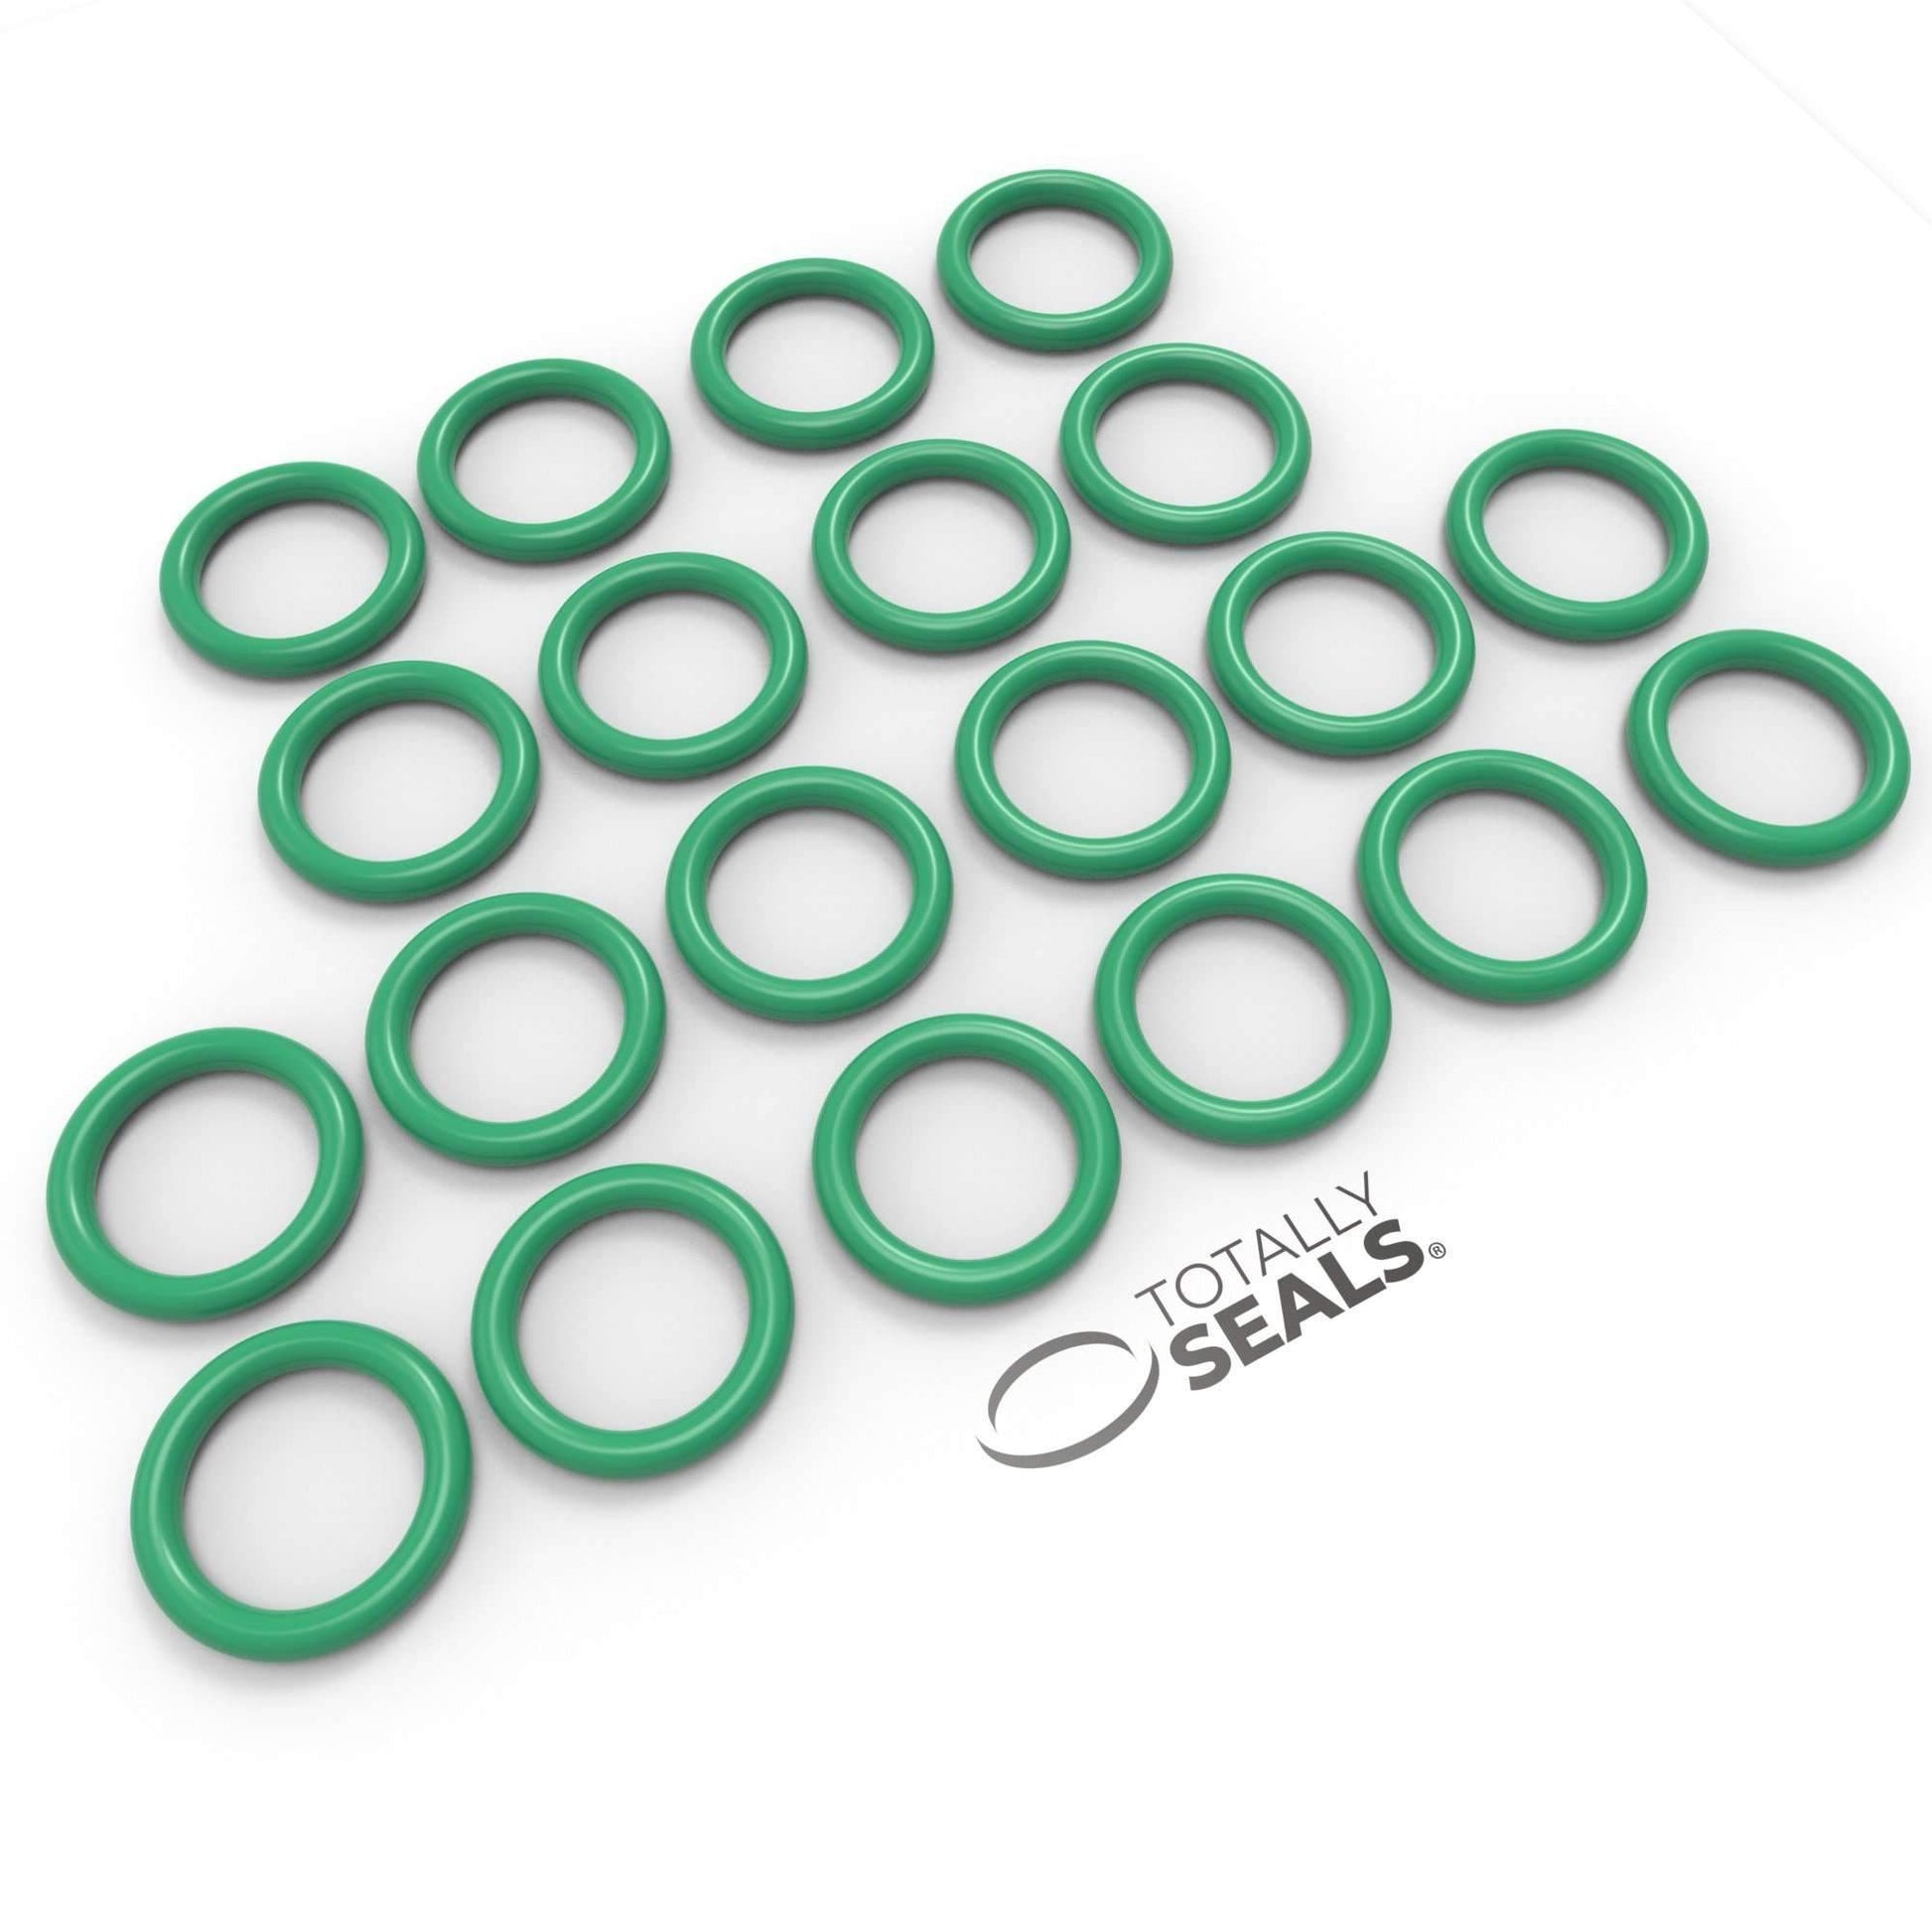 3mm x 2mm (7mm OD) FKM (Viton™) O-Rings - Totally Seals®